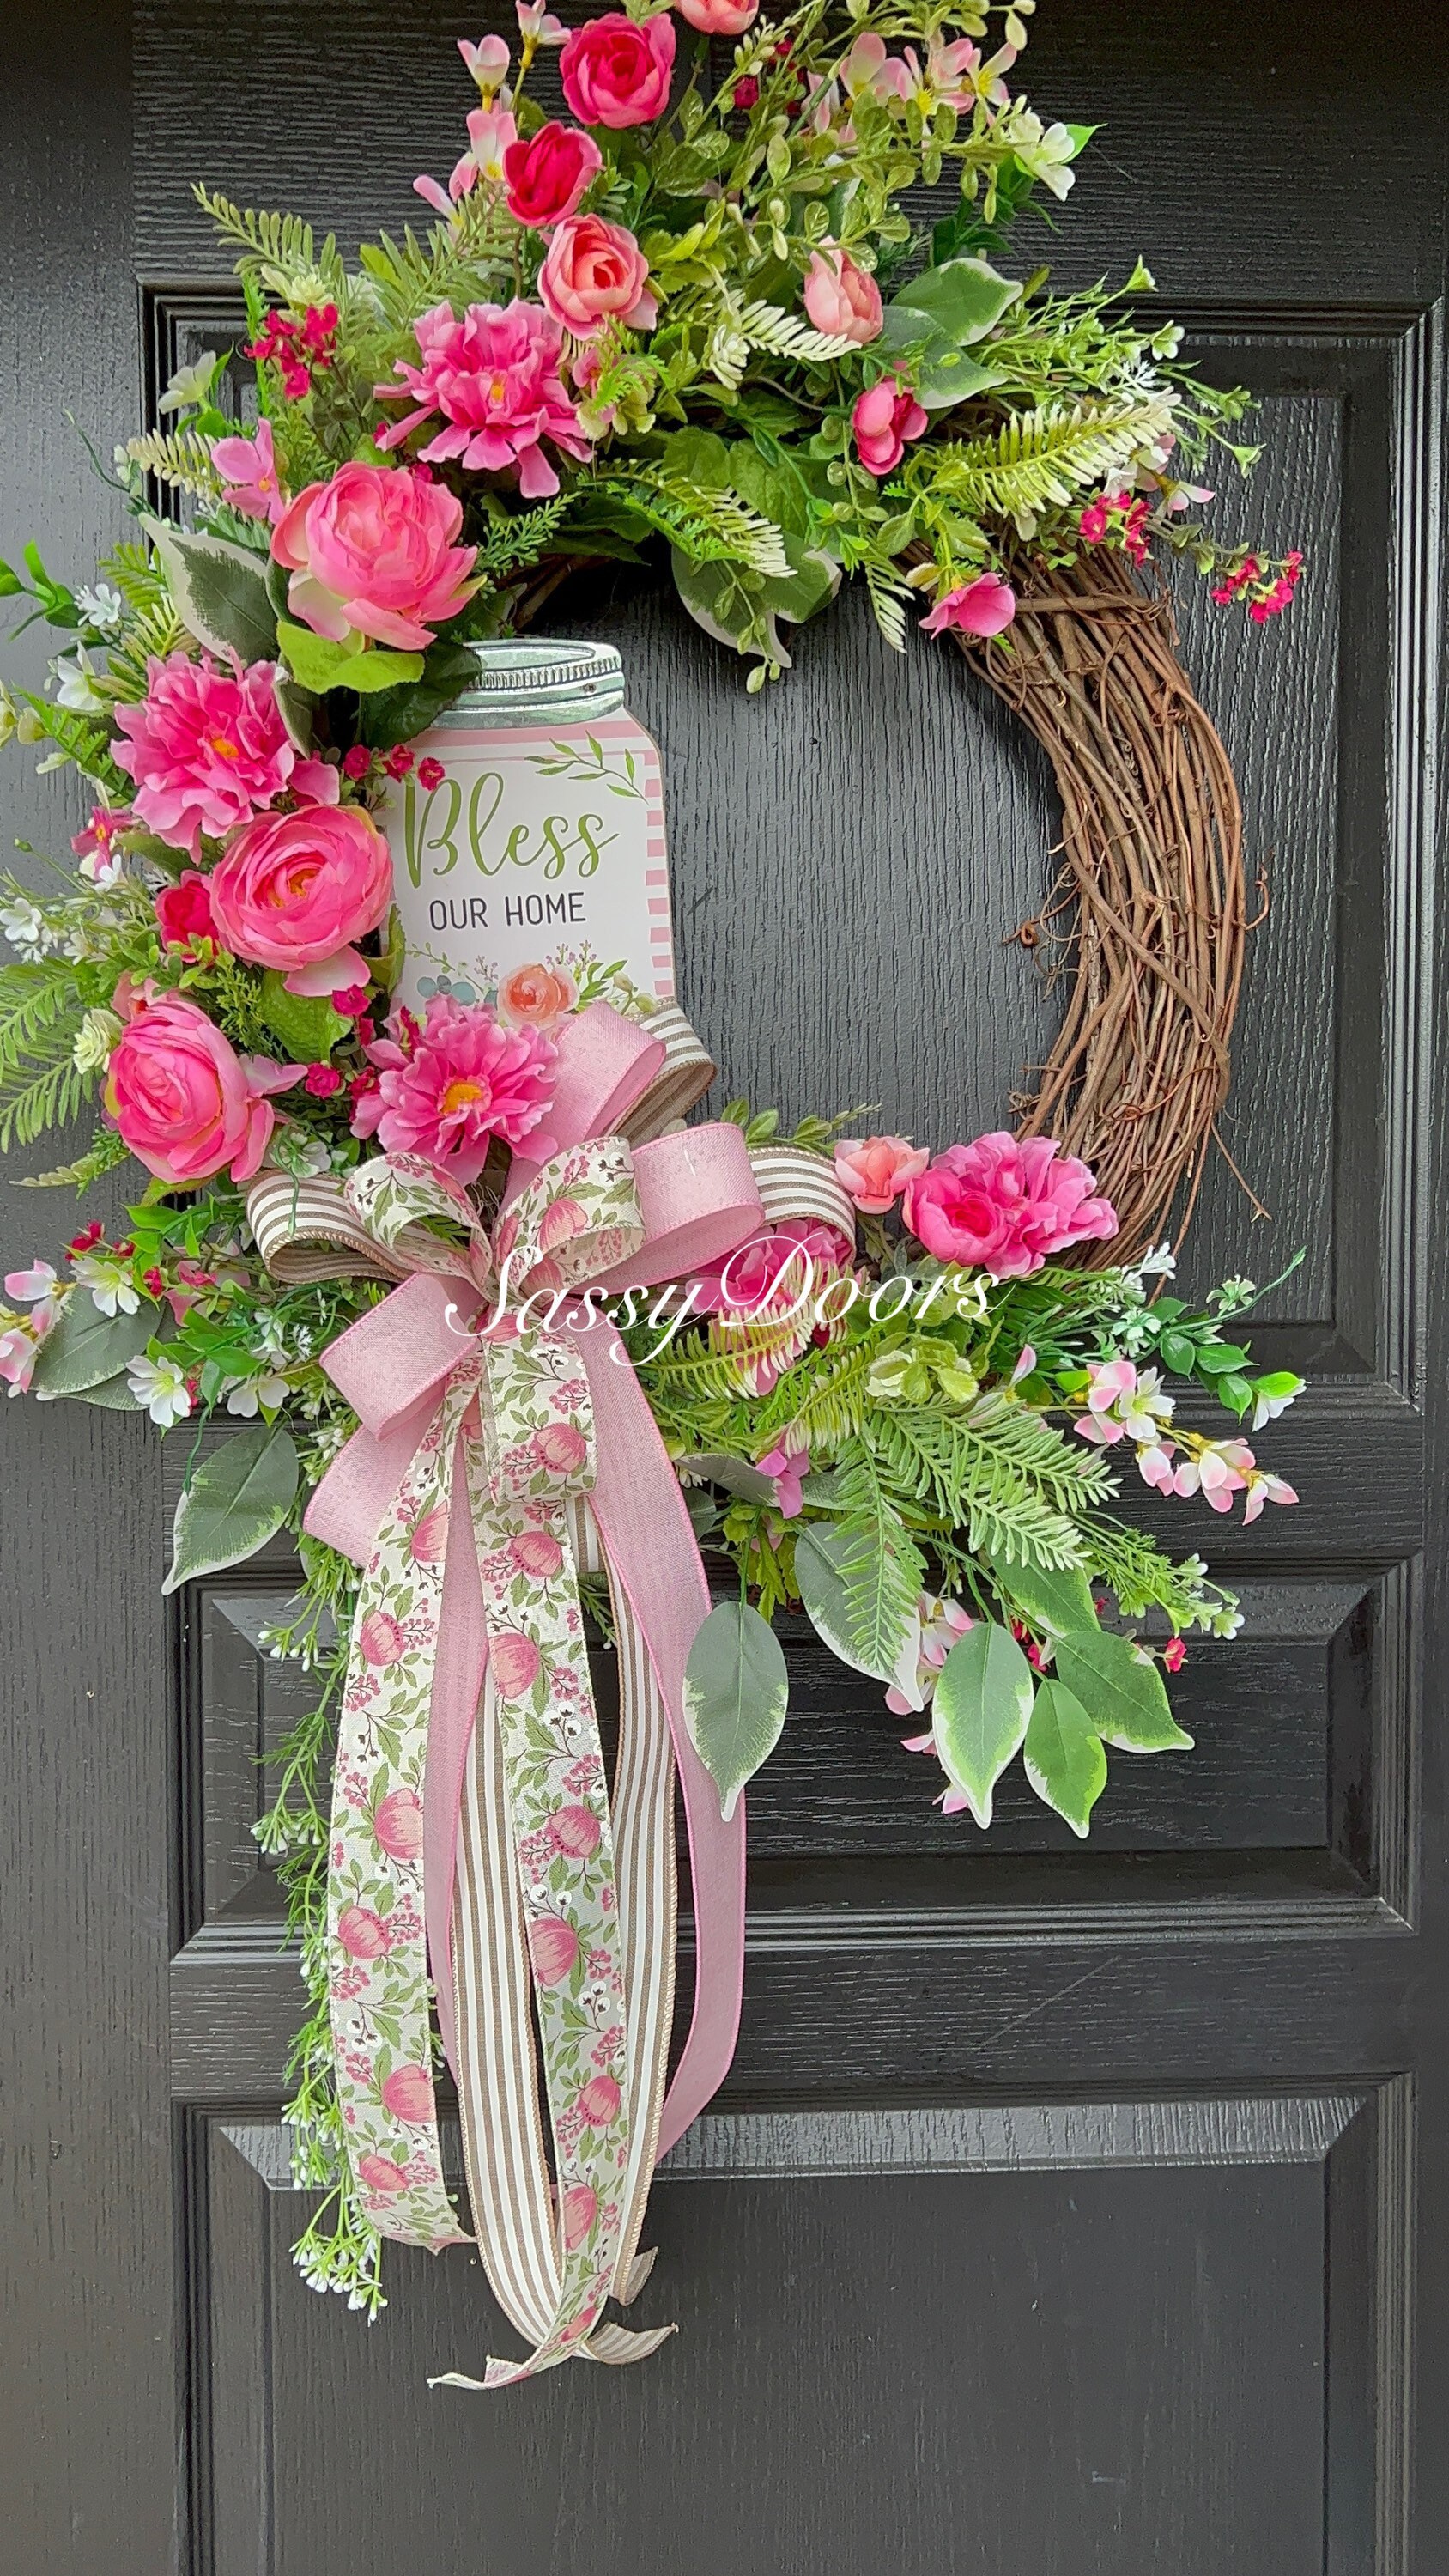 34 Gorgeous Spring Wreaths to Brighten Your Front Door